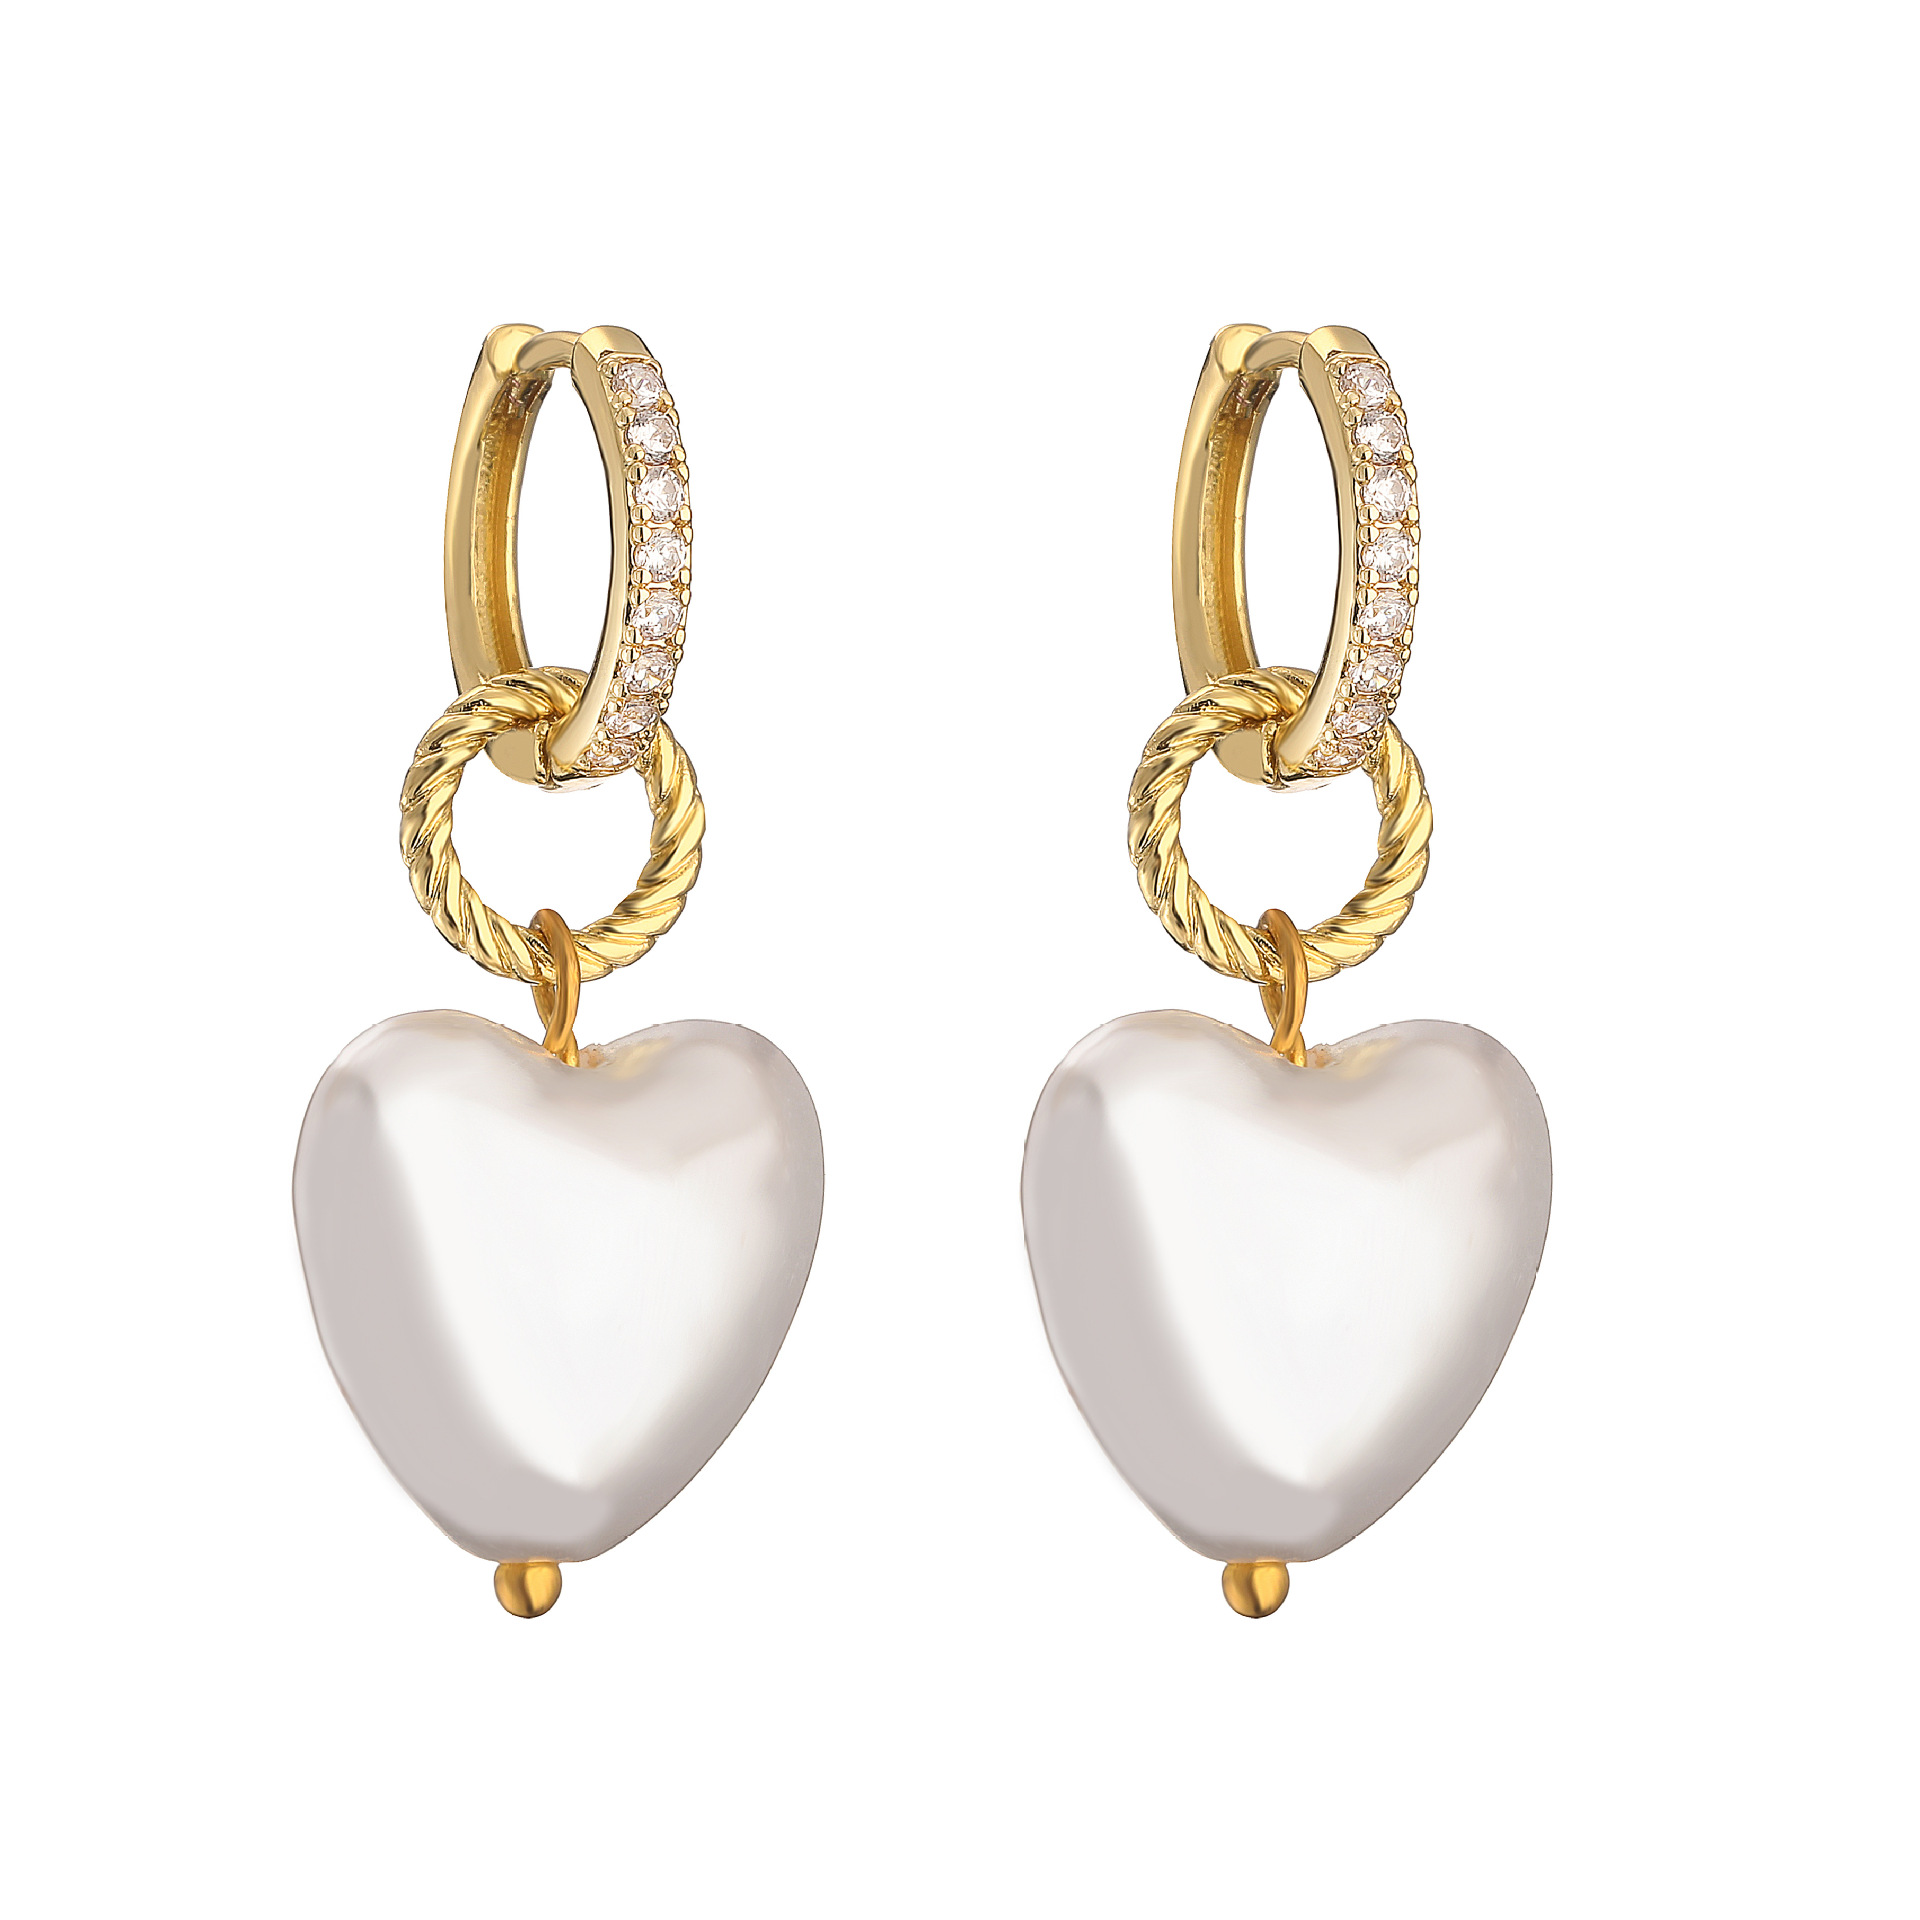 1:One pair of gold earrings